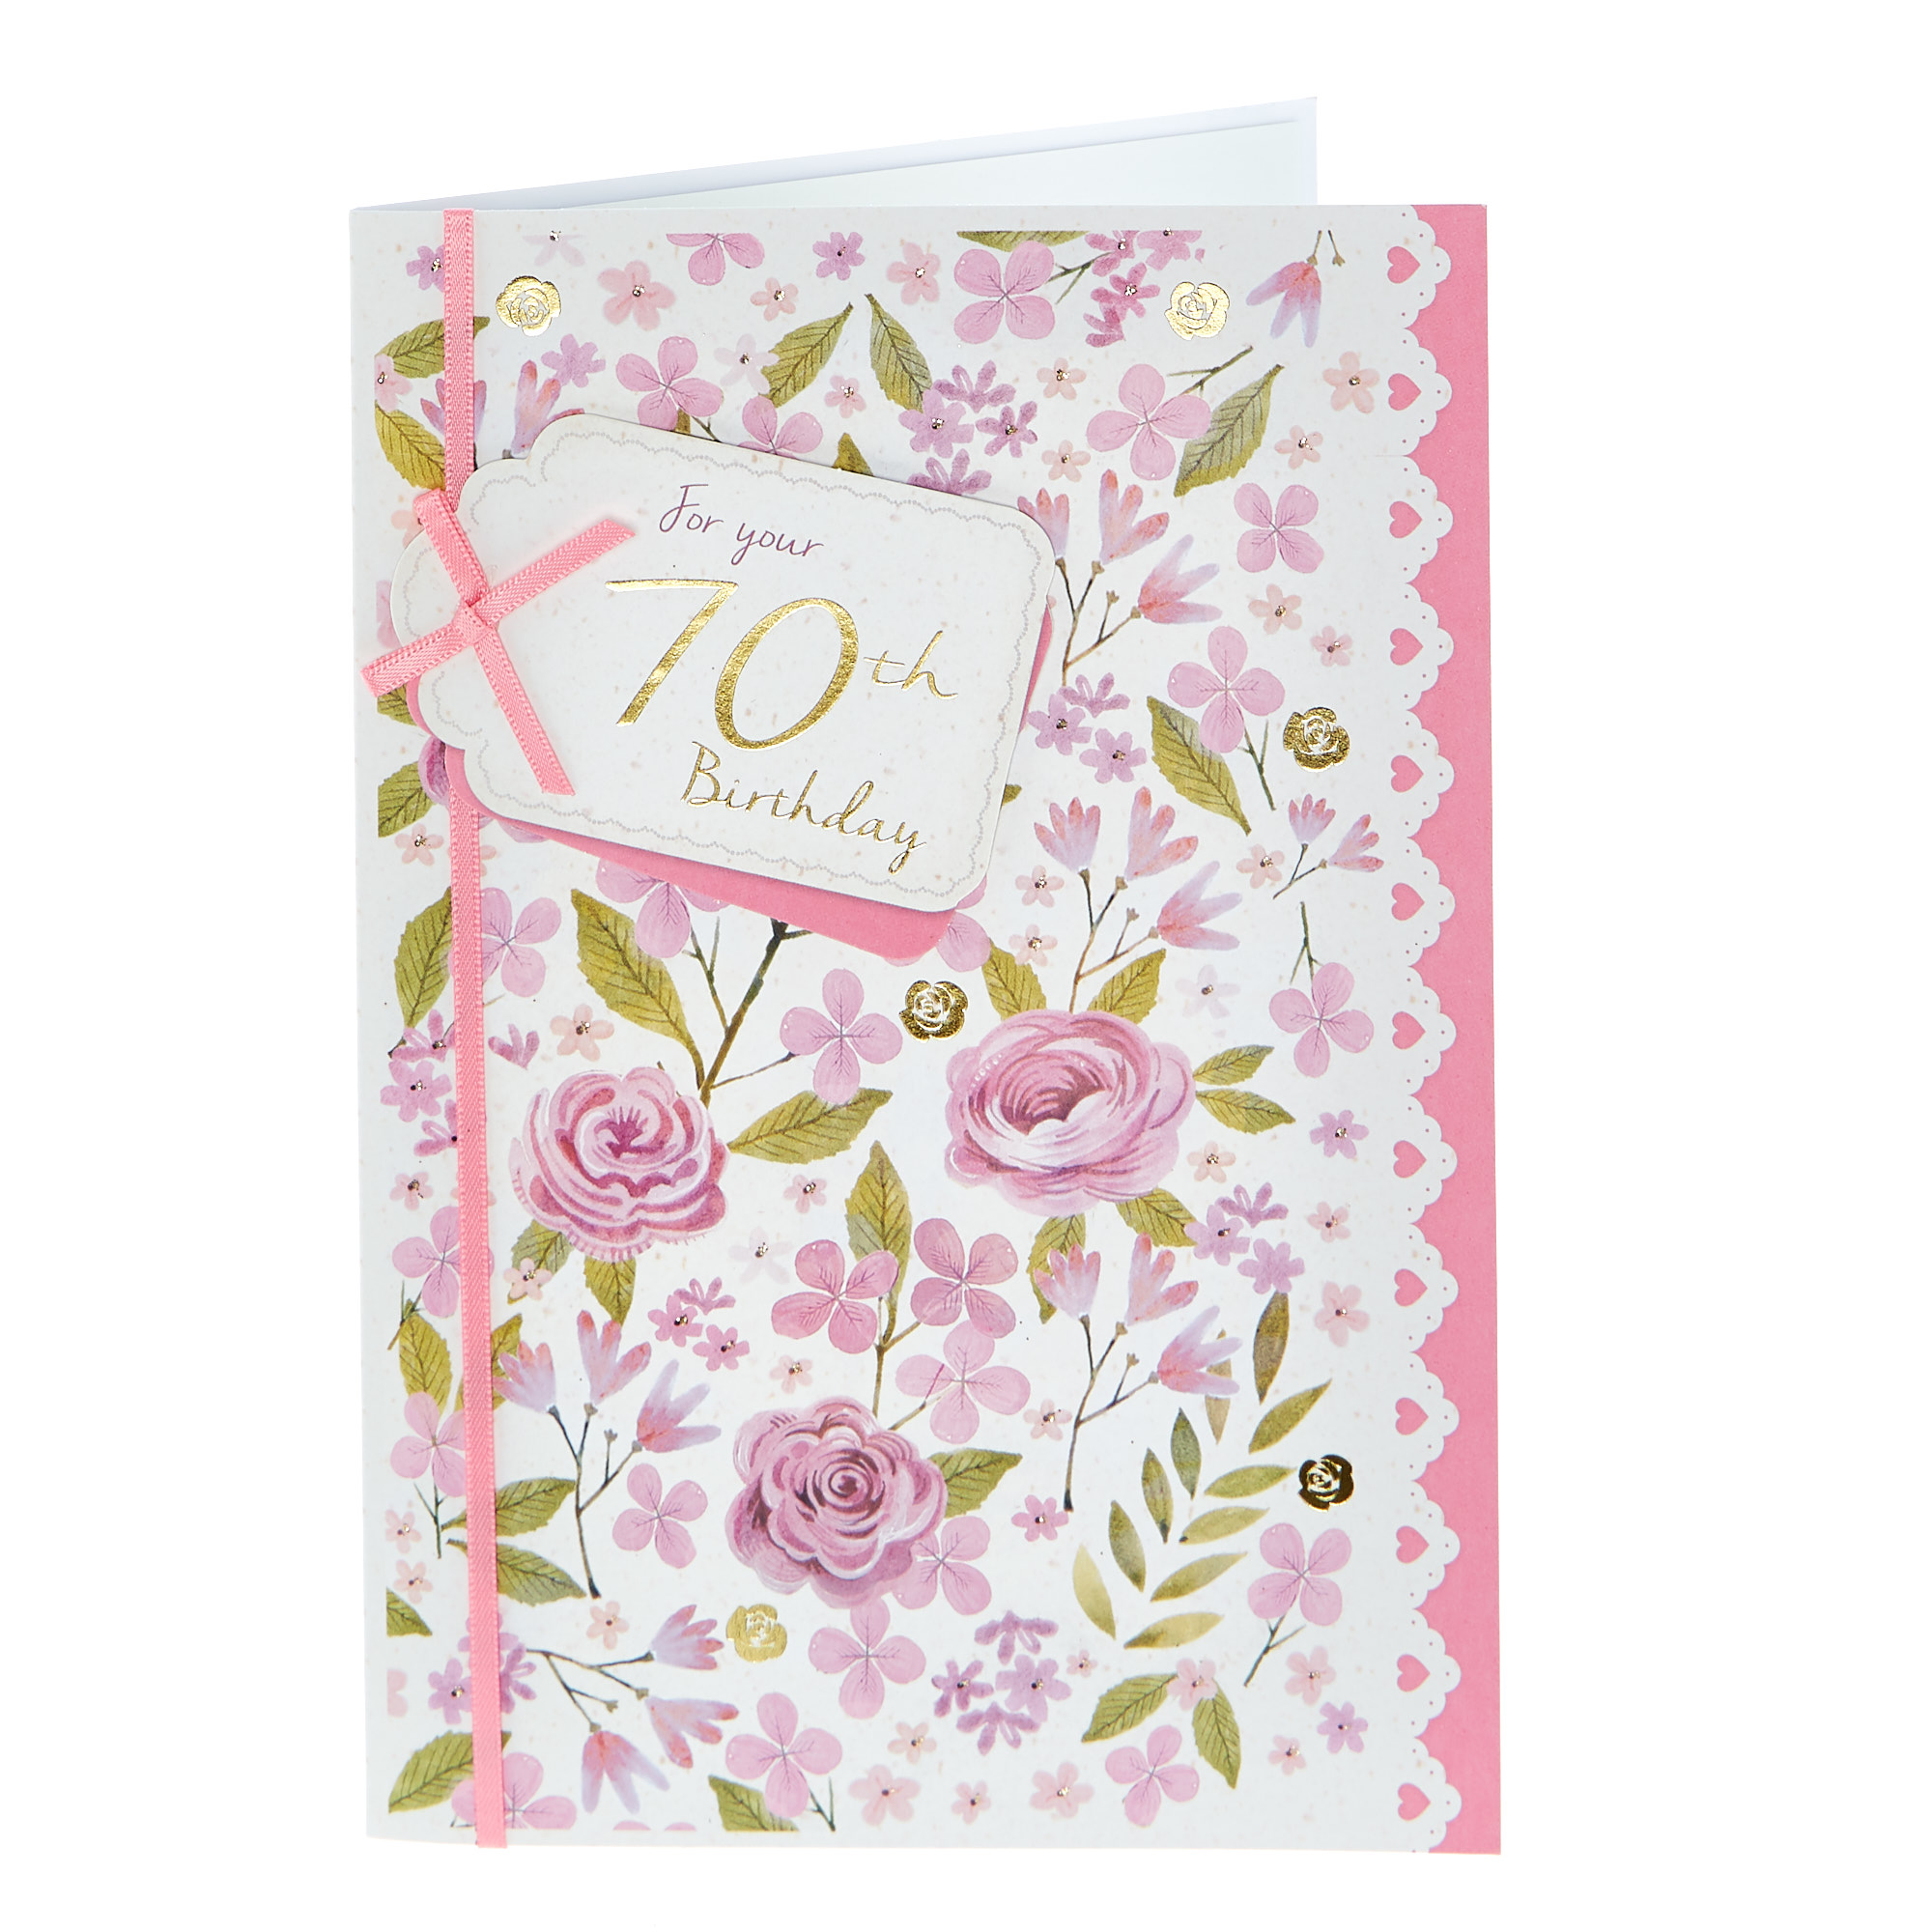 70th Birthday Card - Pink Flowers 